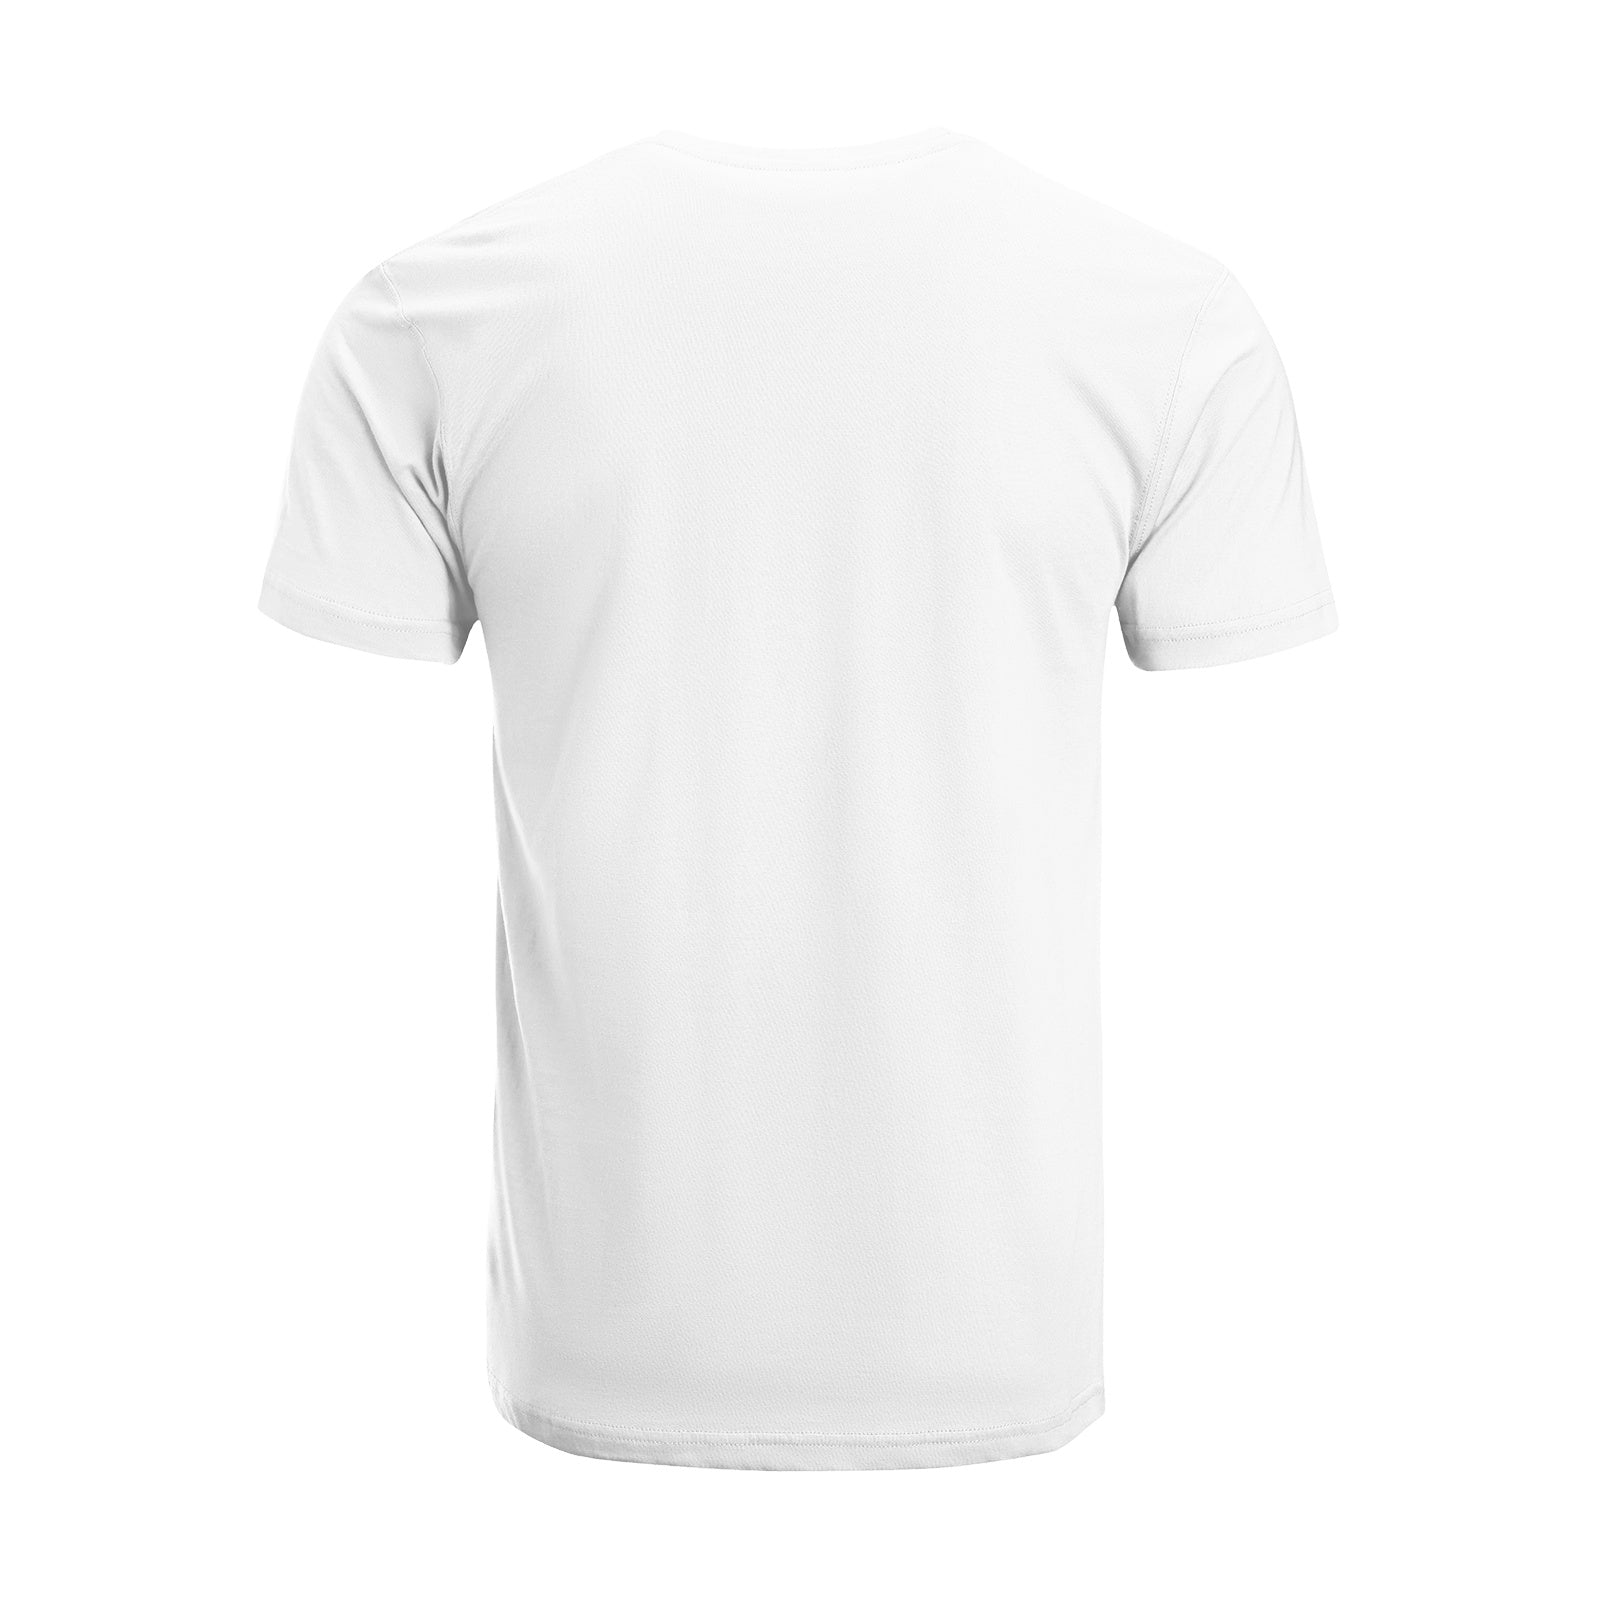 Unisex Short Sleeve Crew Neck Cotton Jersey T-Shirt Gym No. 38 - Tara-Outfits.com